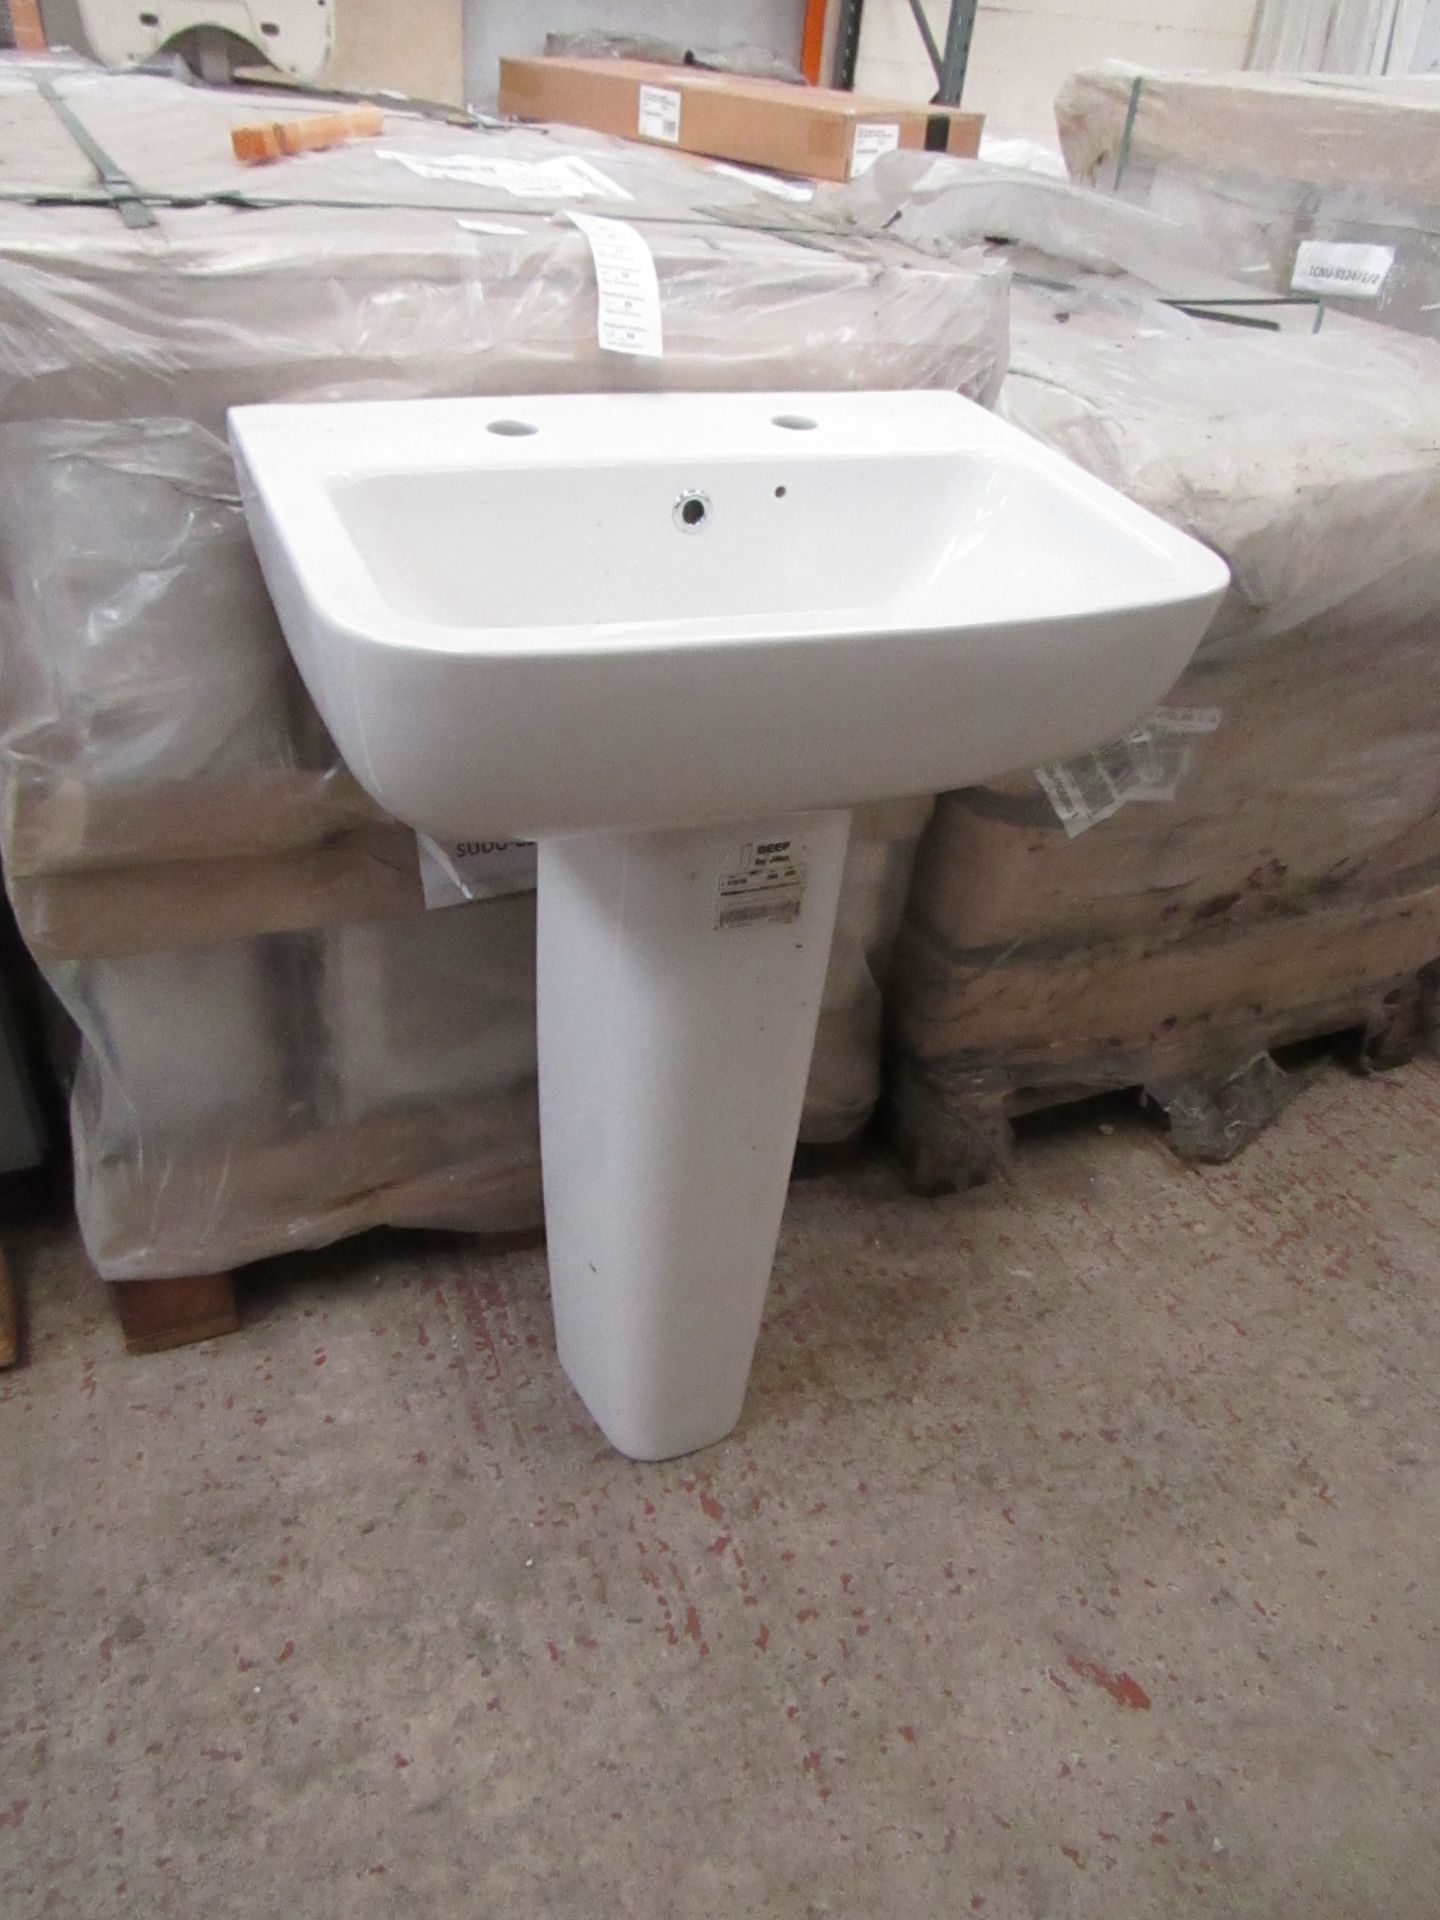 Lecico 54cm 2 tap hole sink with Jika universal pedestal, both unused